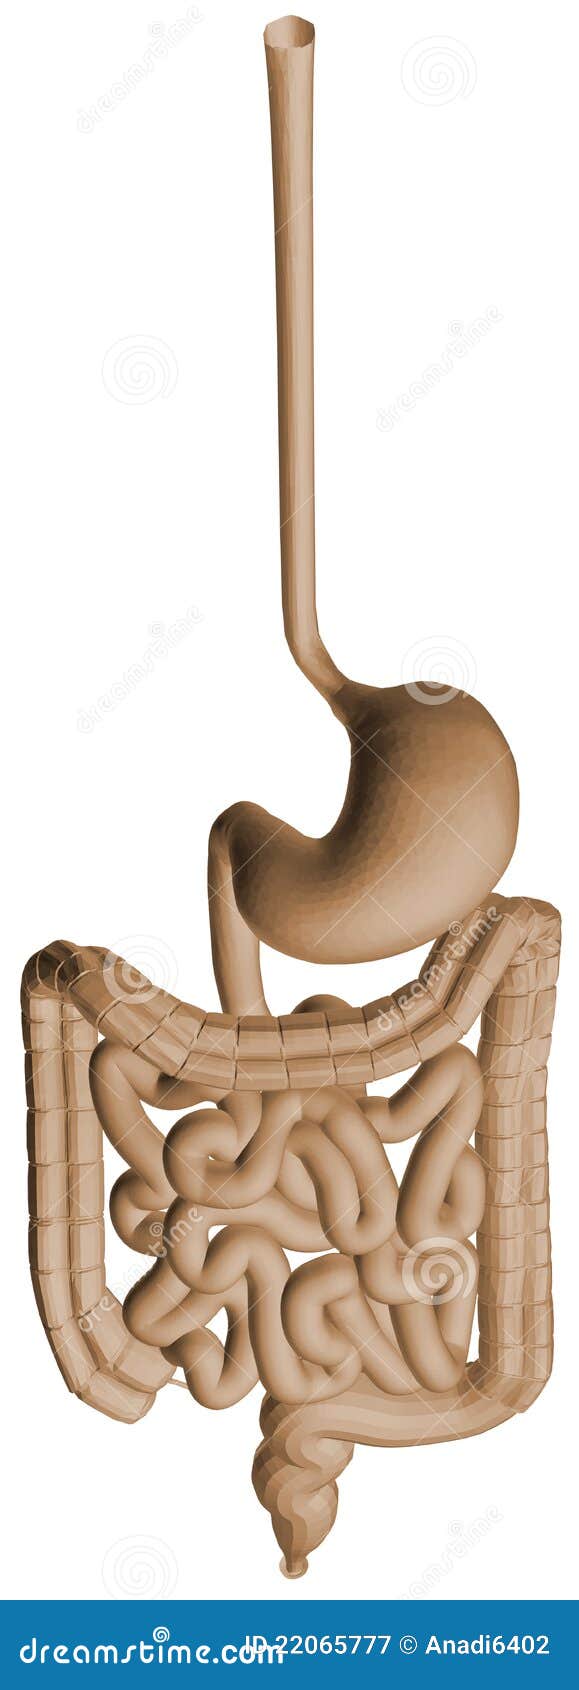 Digestive System stock illustration. Illustration of sphincter - 22065777